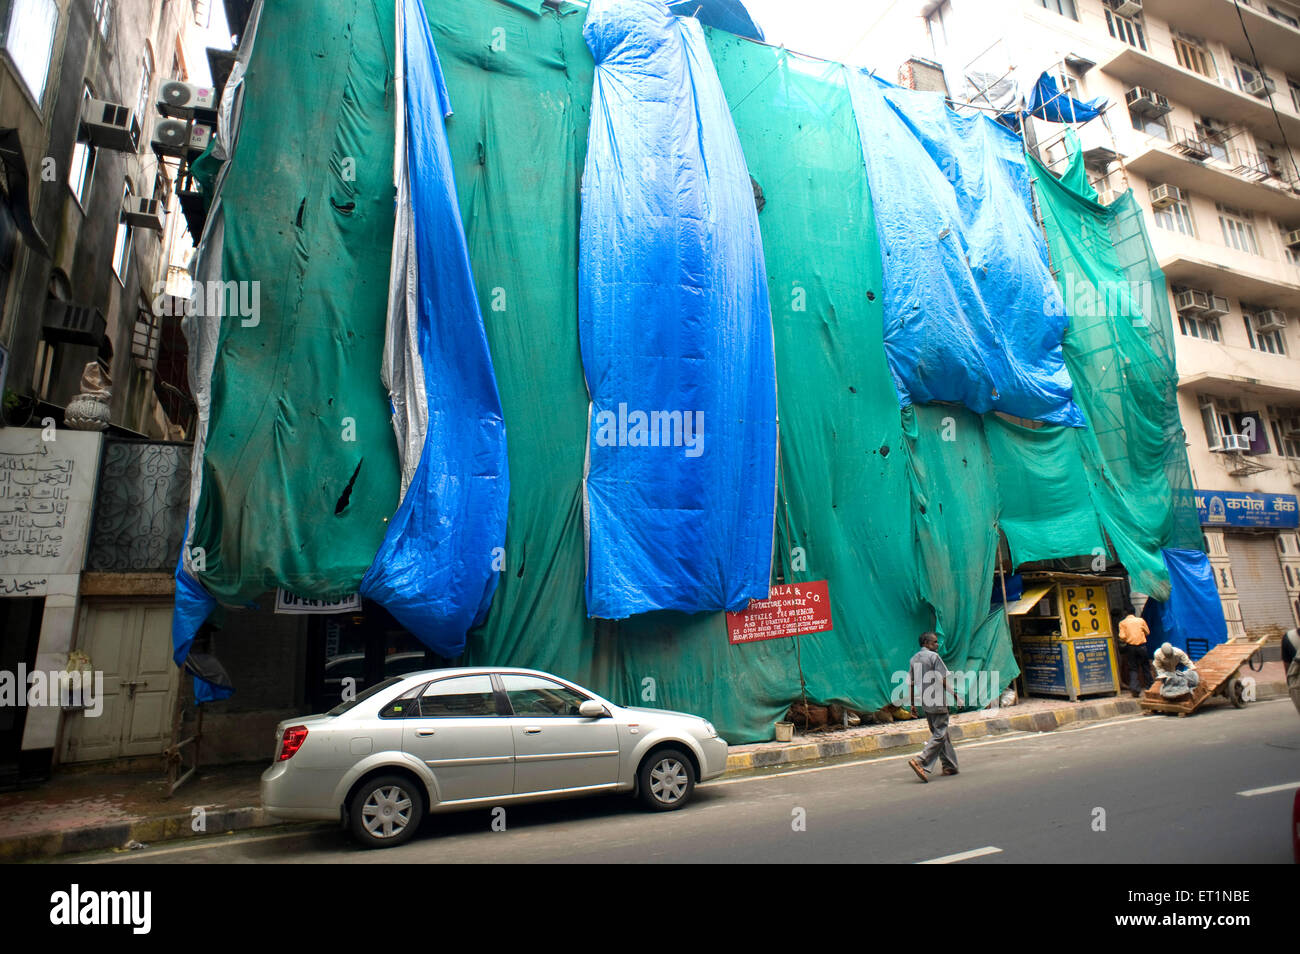 Telone copertura telone di plastica telone impermeabile tenda in cantiere a Bombay Mumbai Maharashtra India Foto Stock